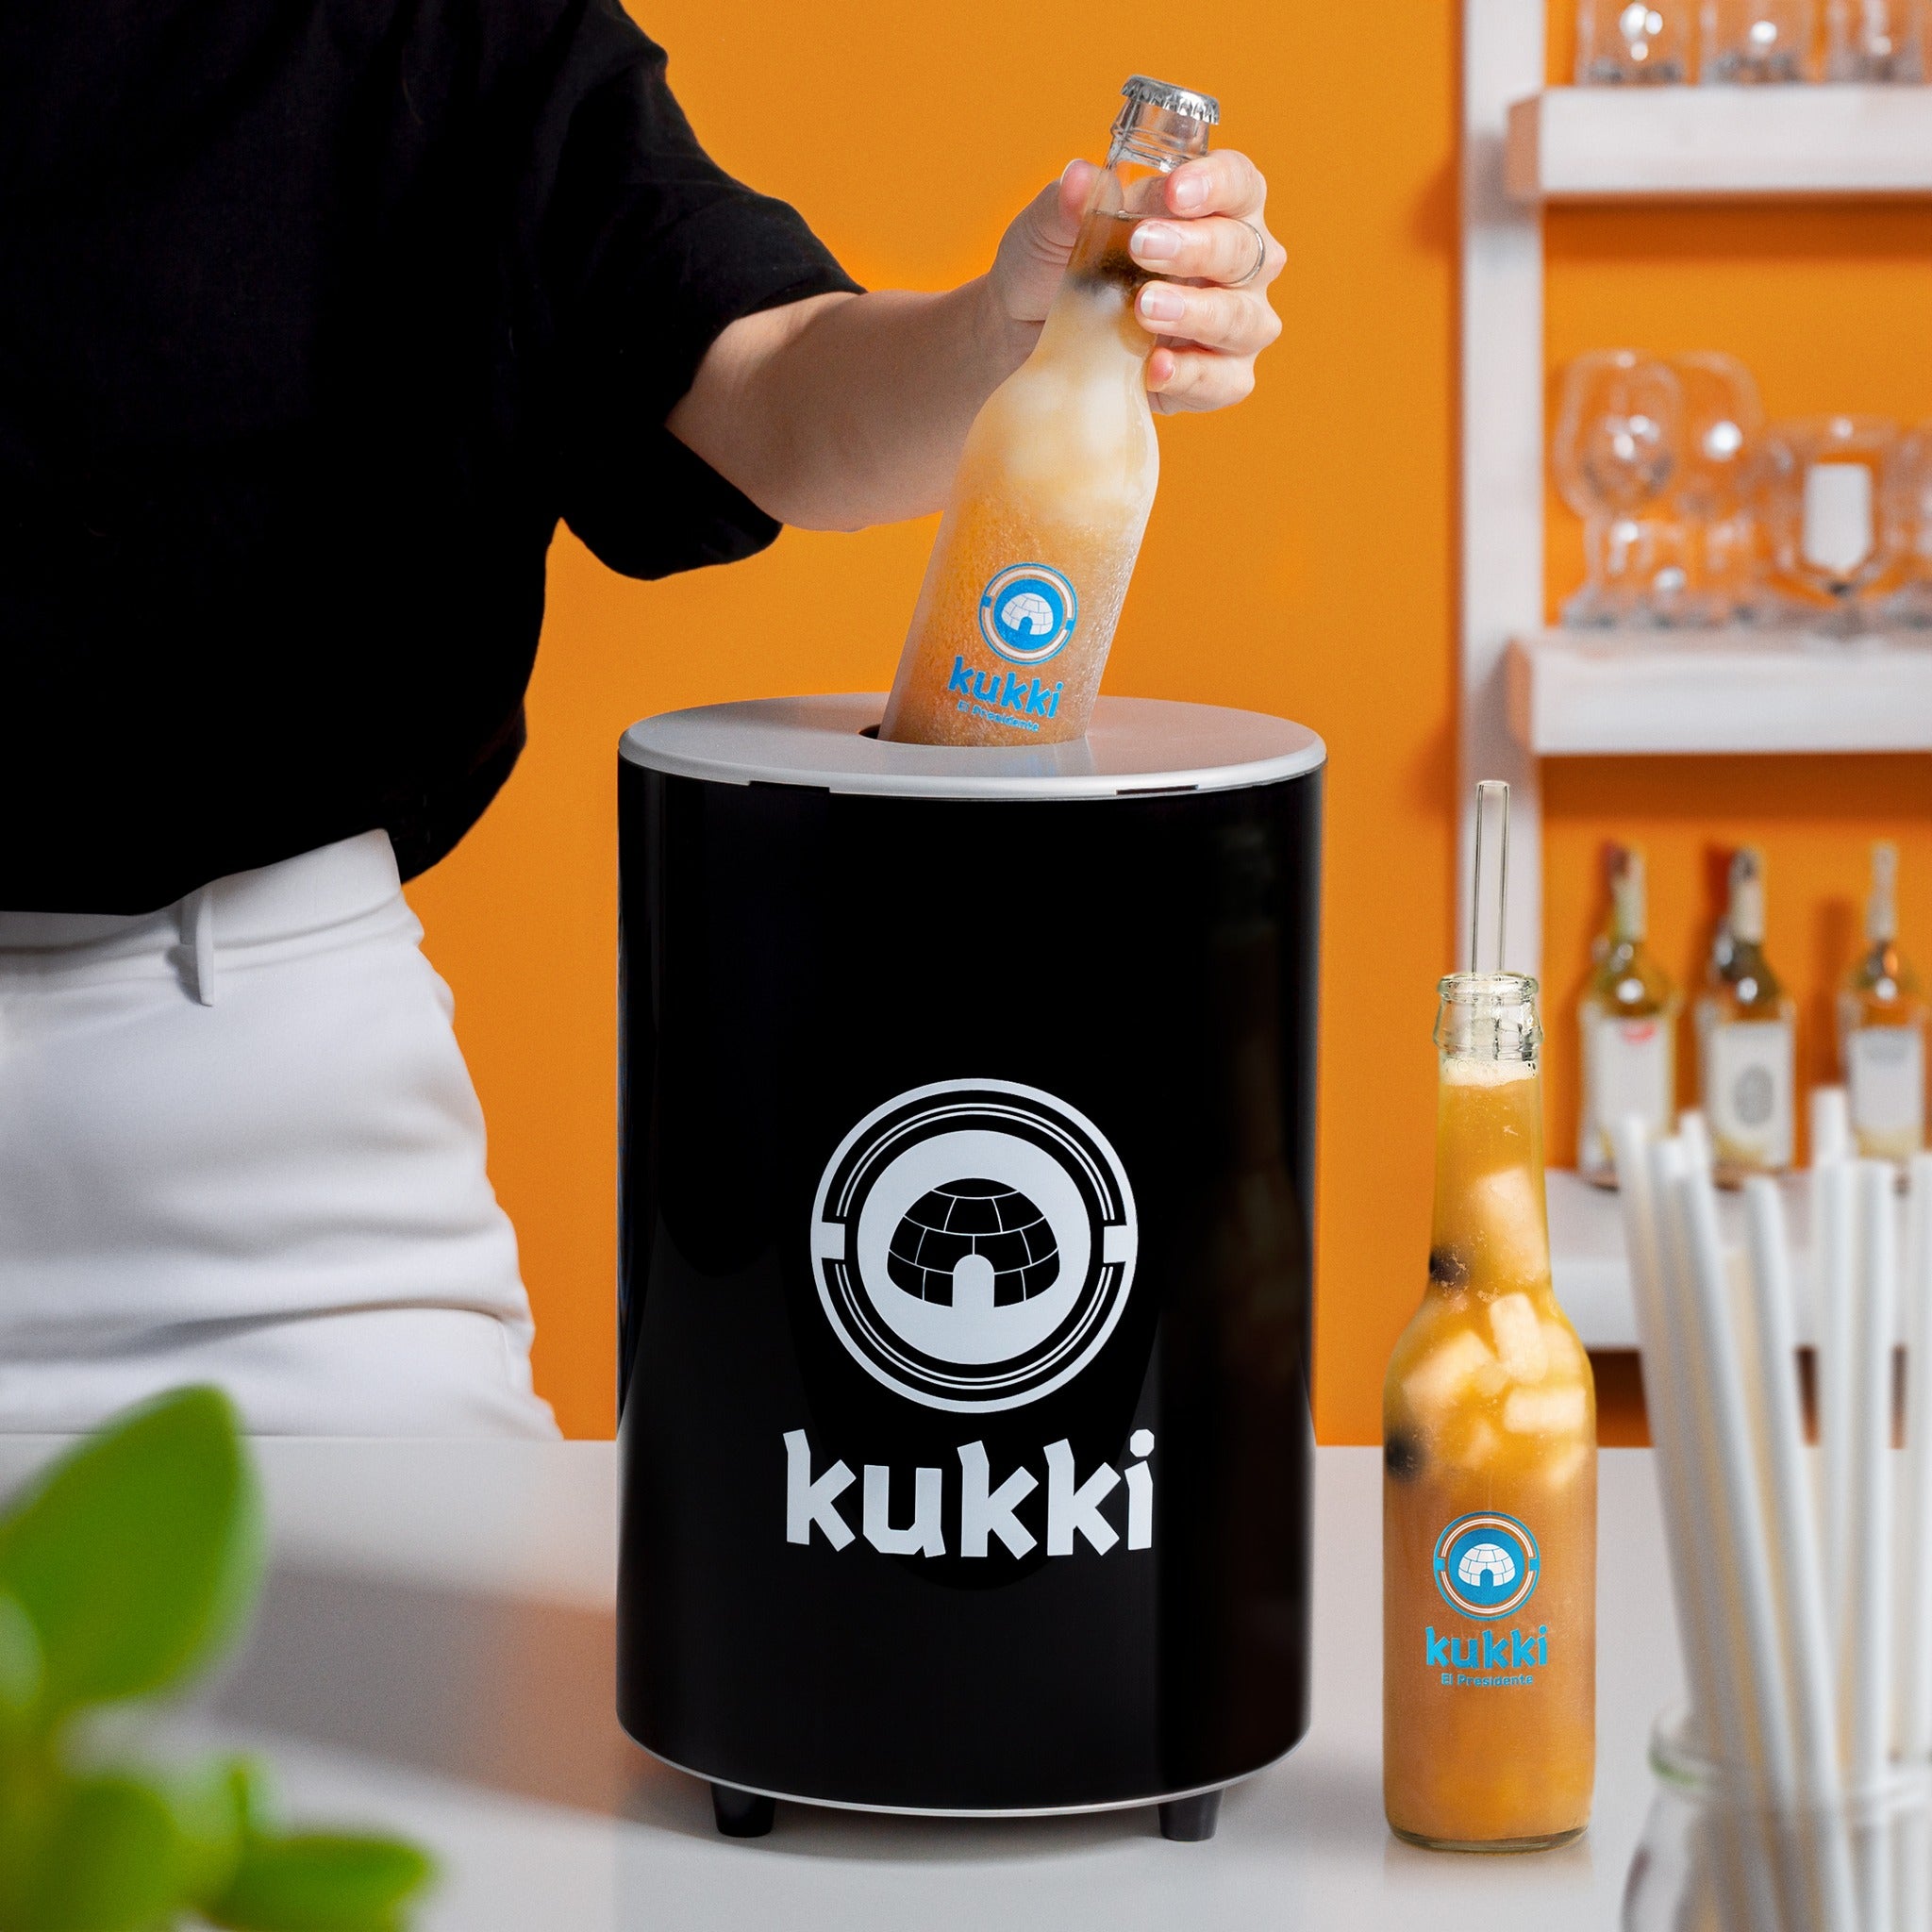 kukki toaster + promotional package